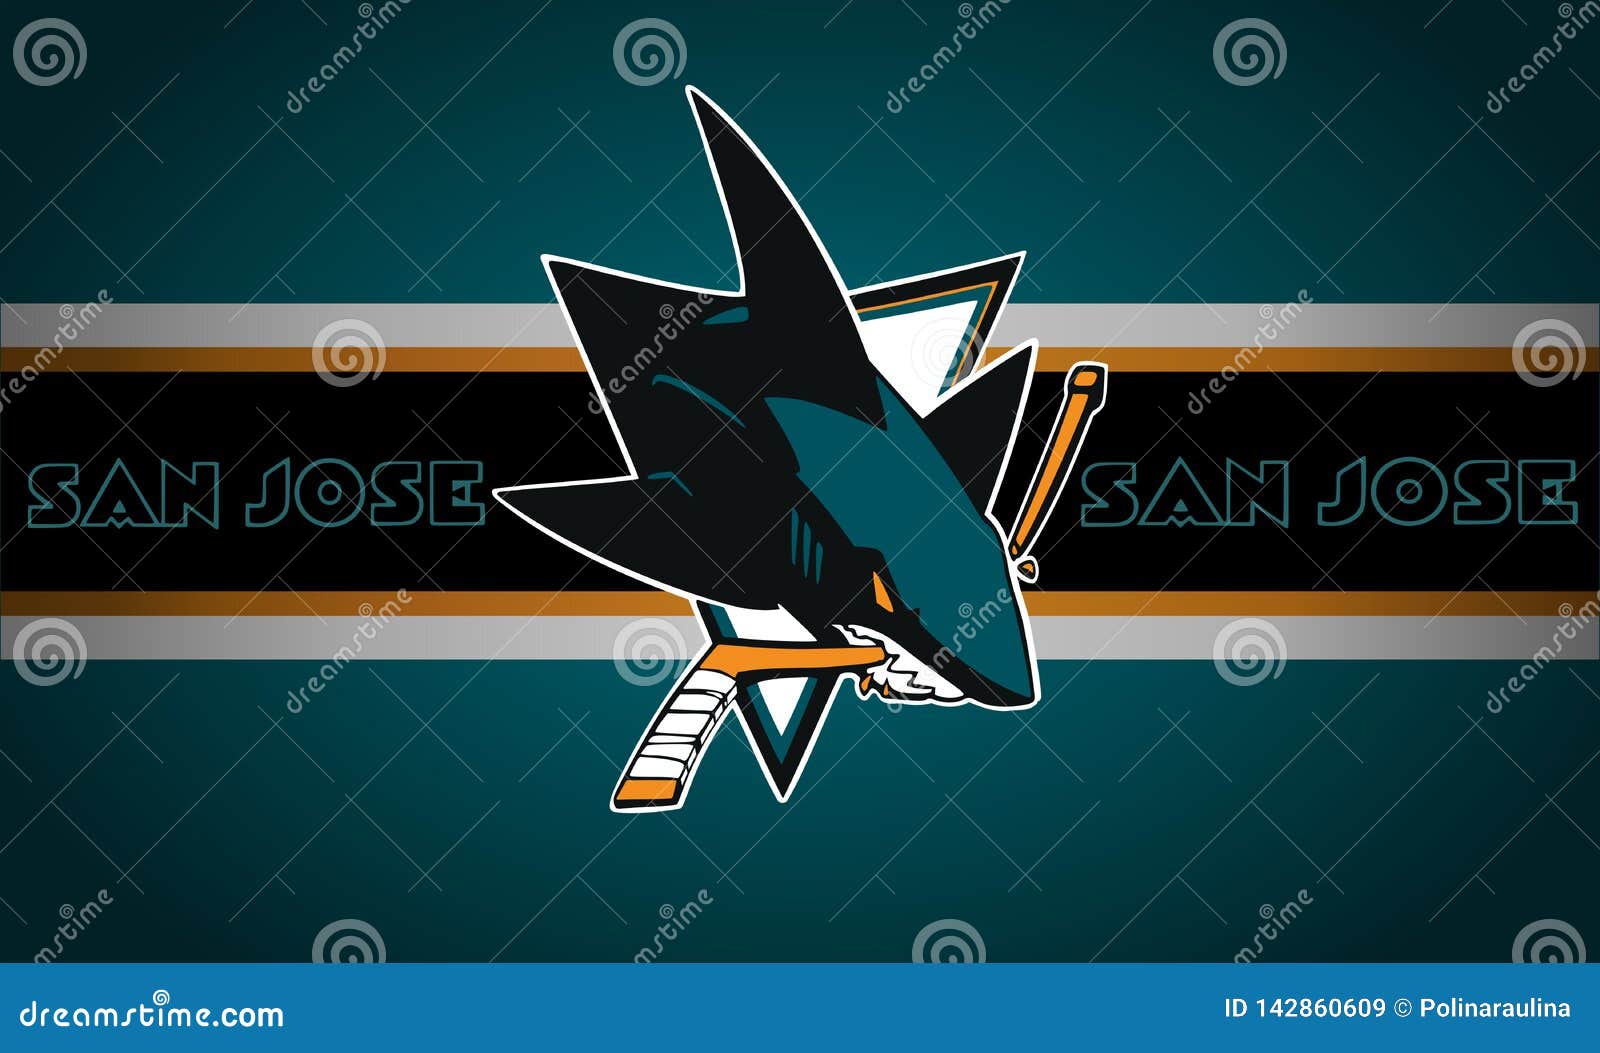 San Jose Sharks Wallpapers on Behance  San jose sharks San jose sharks  tattoo San jose sharks hockey